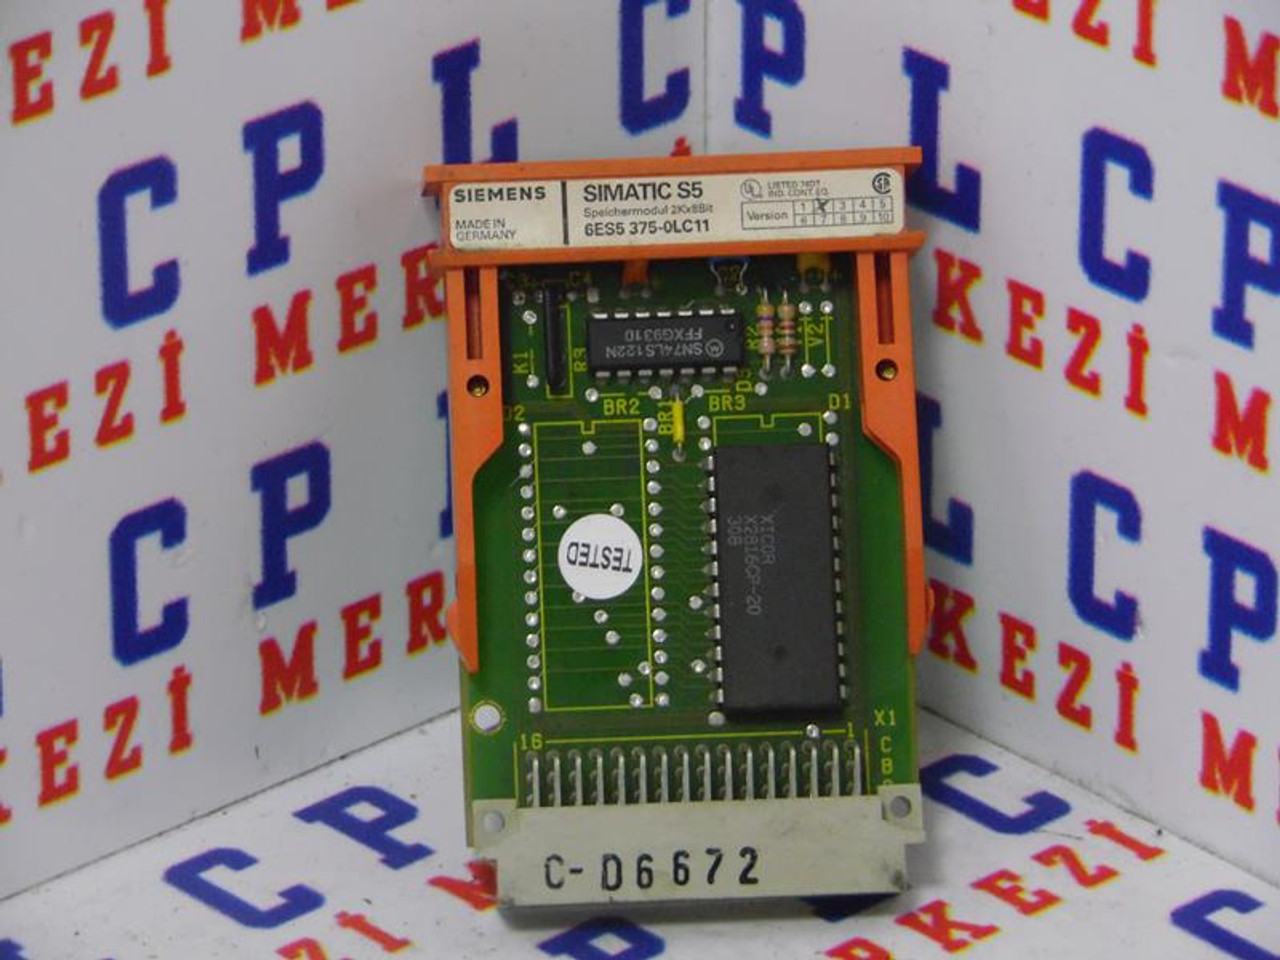 6ES5 375-0LC11, 6ES5375-0LC11 Siemens S5 Memory module